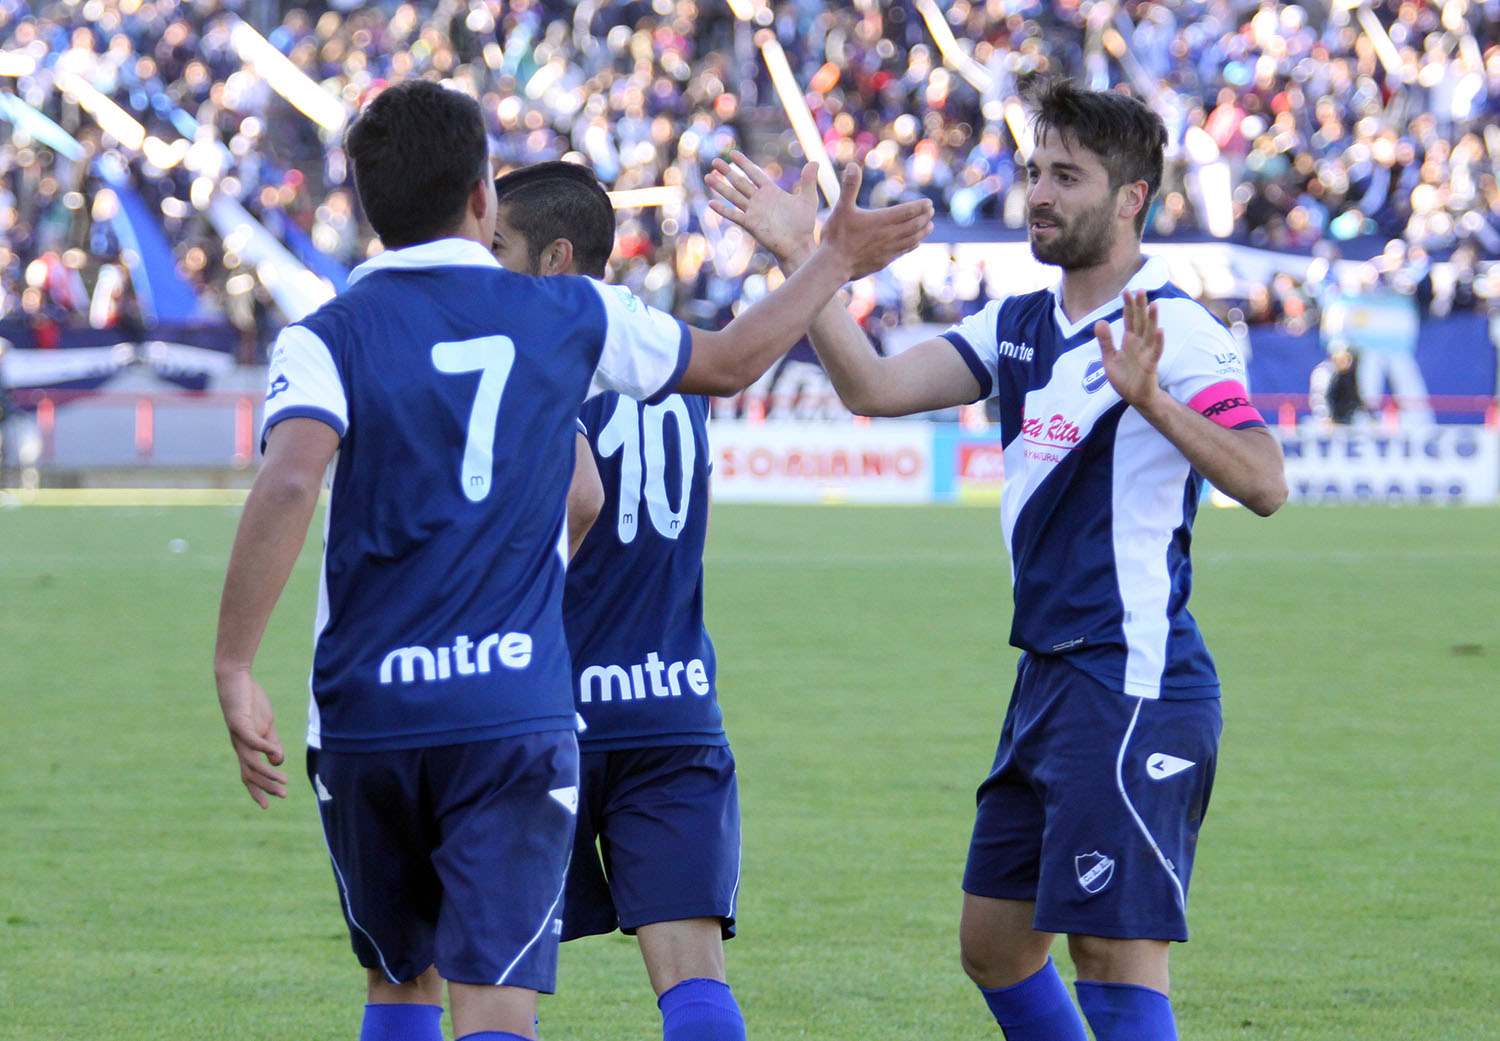 Wilson Albarracín festeja el gol con la figura de la cancha, Damián Luengo. (Foto: Diego Berrutti)